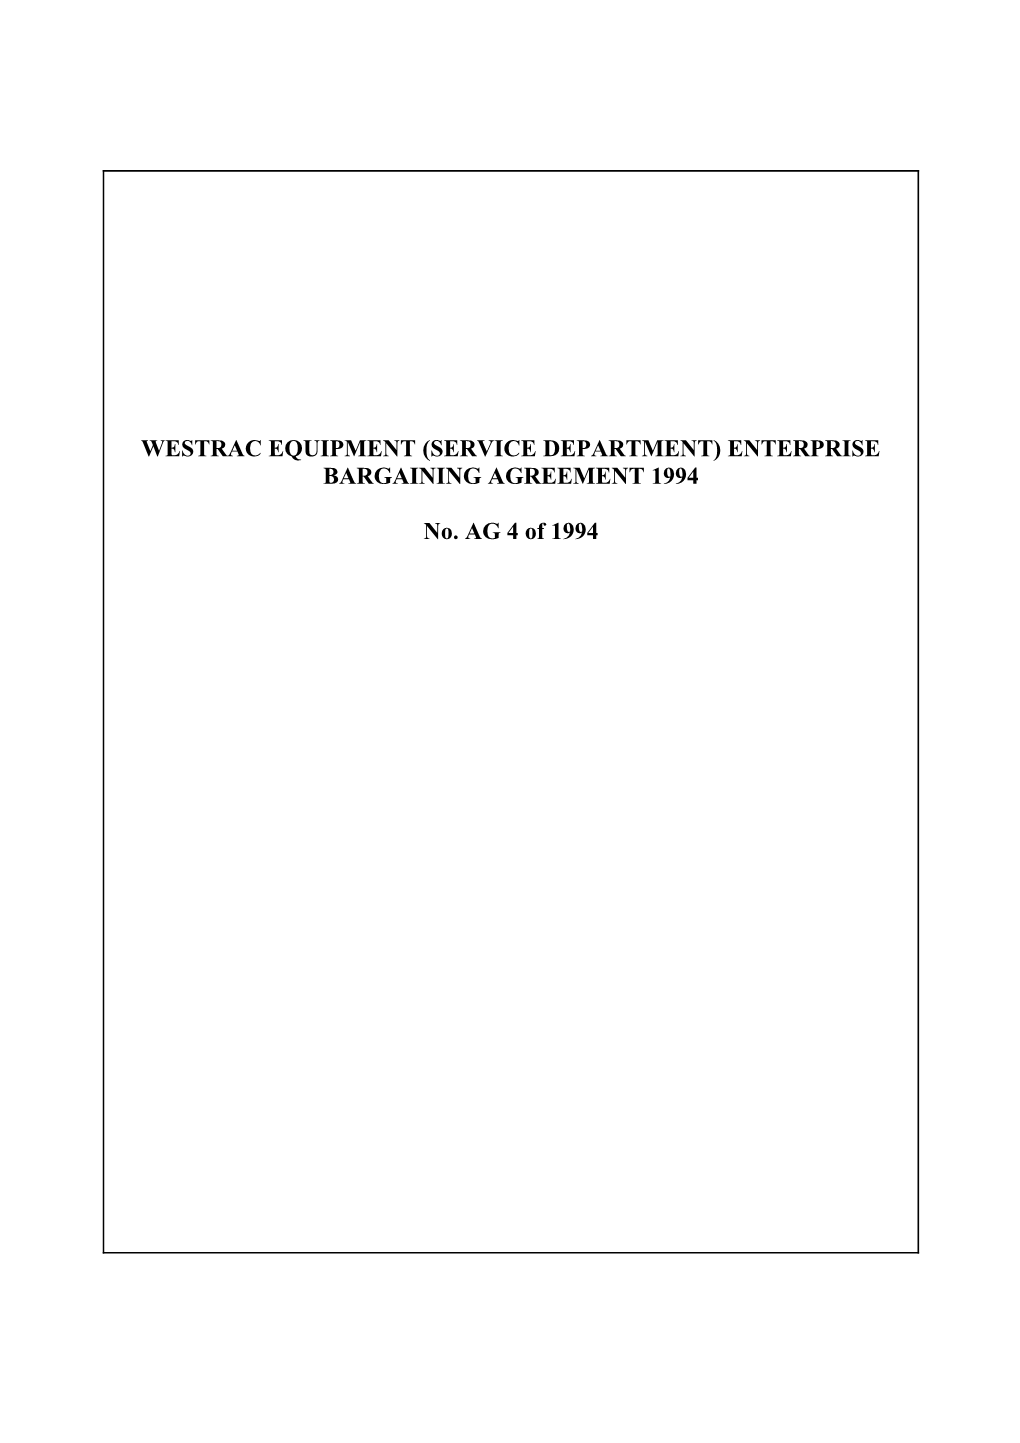 Westrac Equipment (Service Department) Enterprise Bargaining Agreement 1994